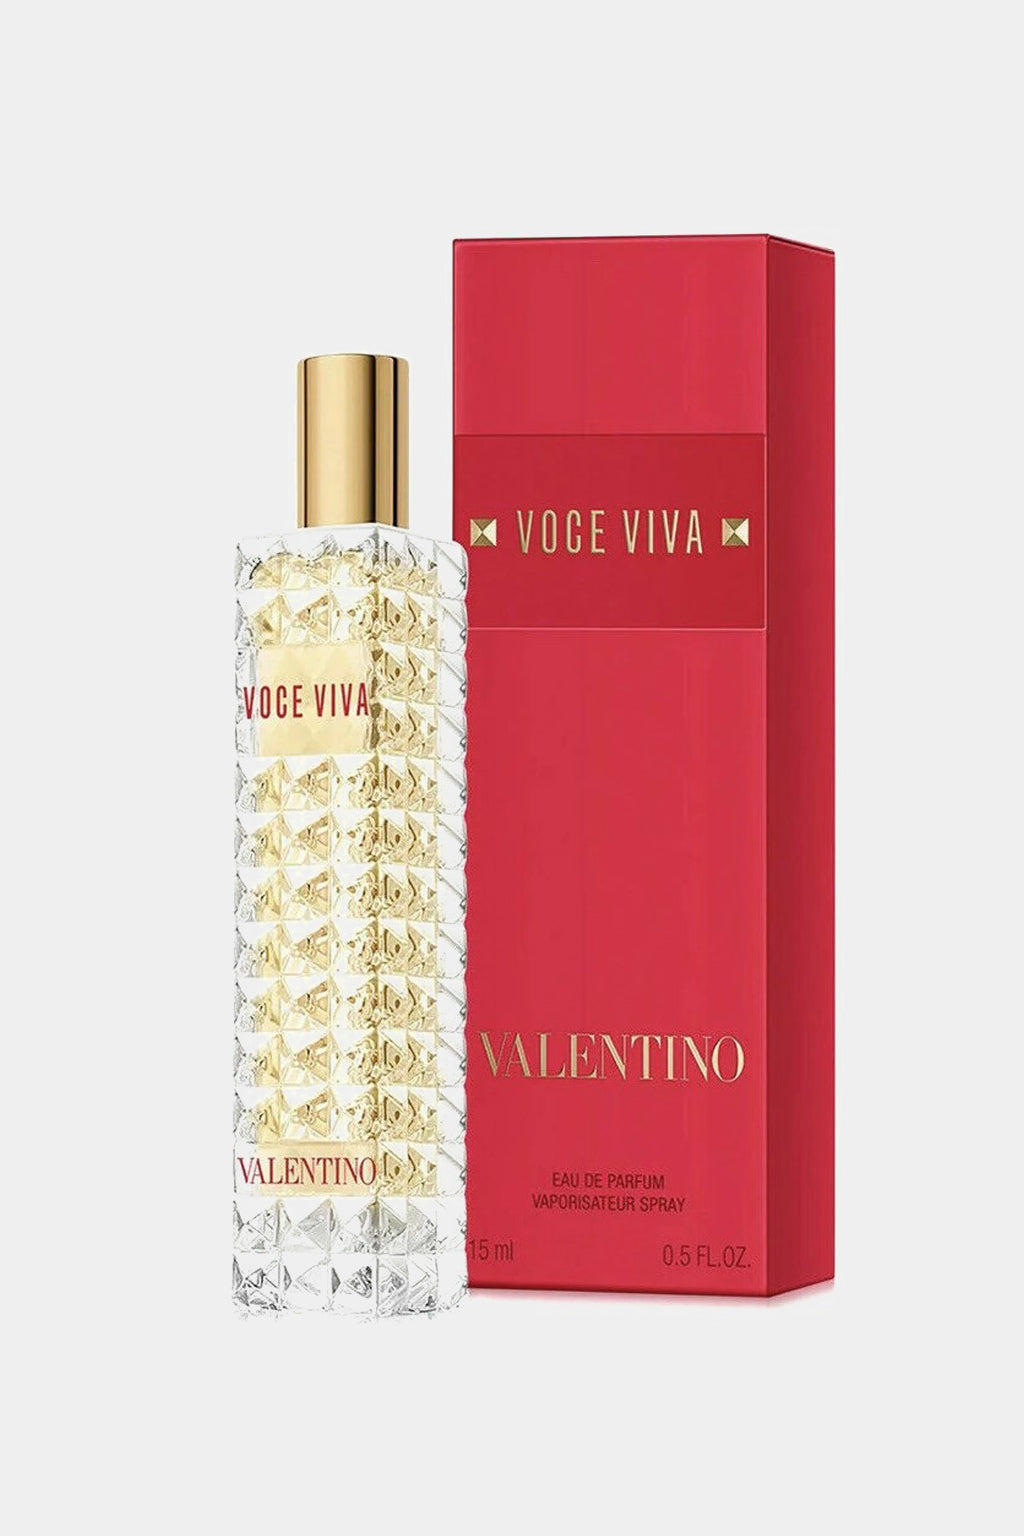 Valentino - Valentino Voce Viva Eau de Parfum Travel Spray